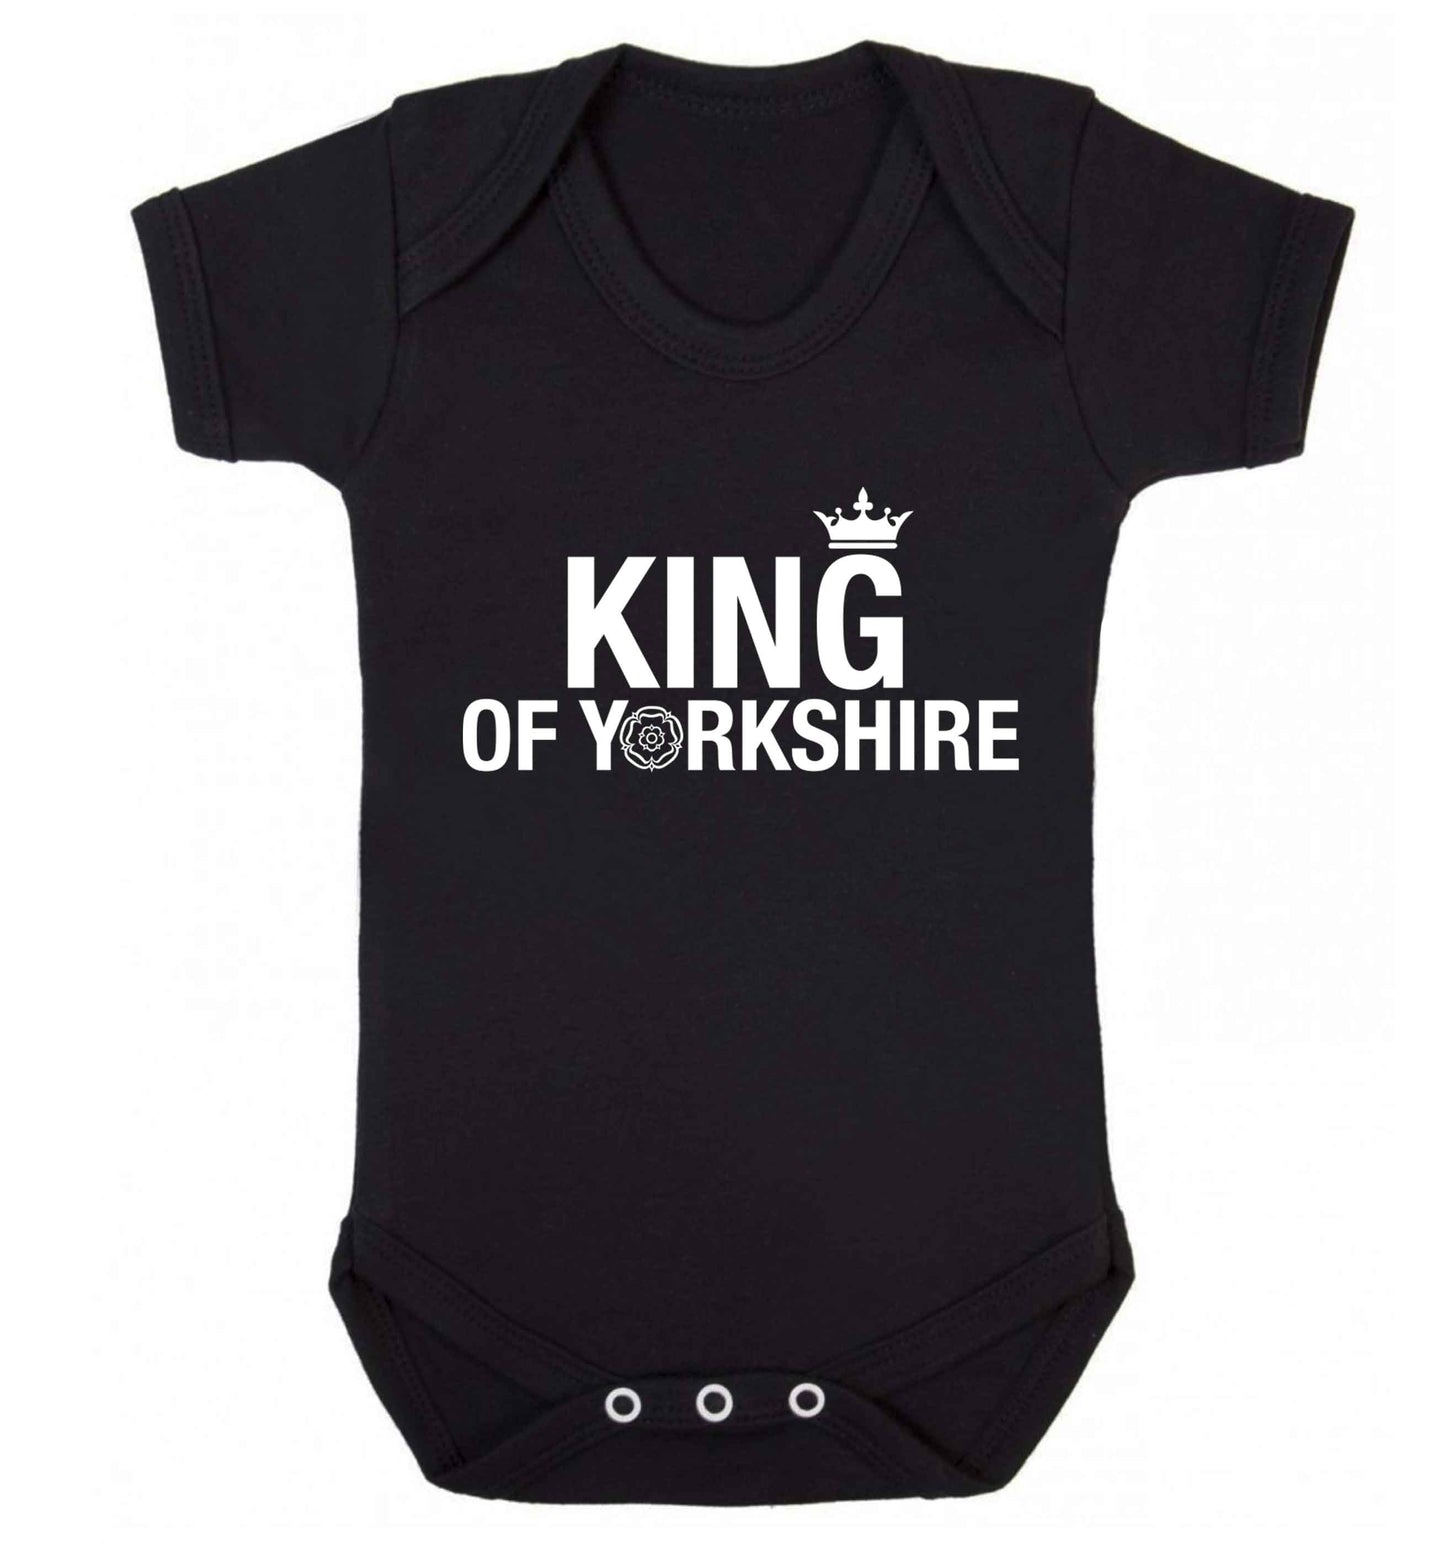 King of Yorkshire Baby Vest black 18-24 months